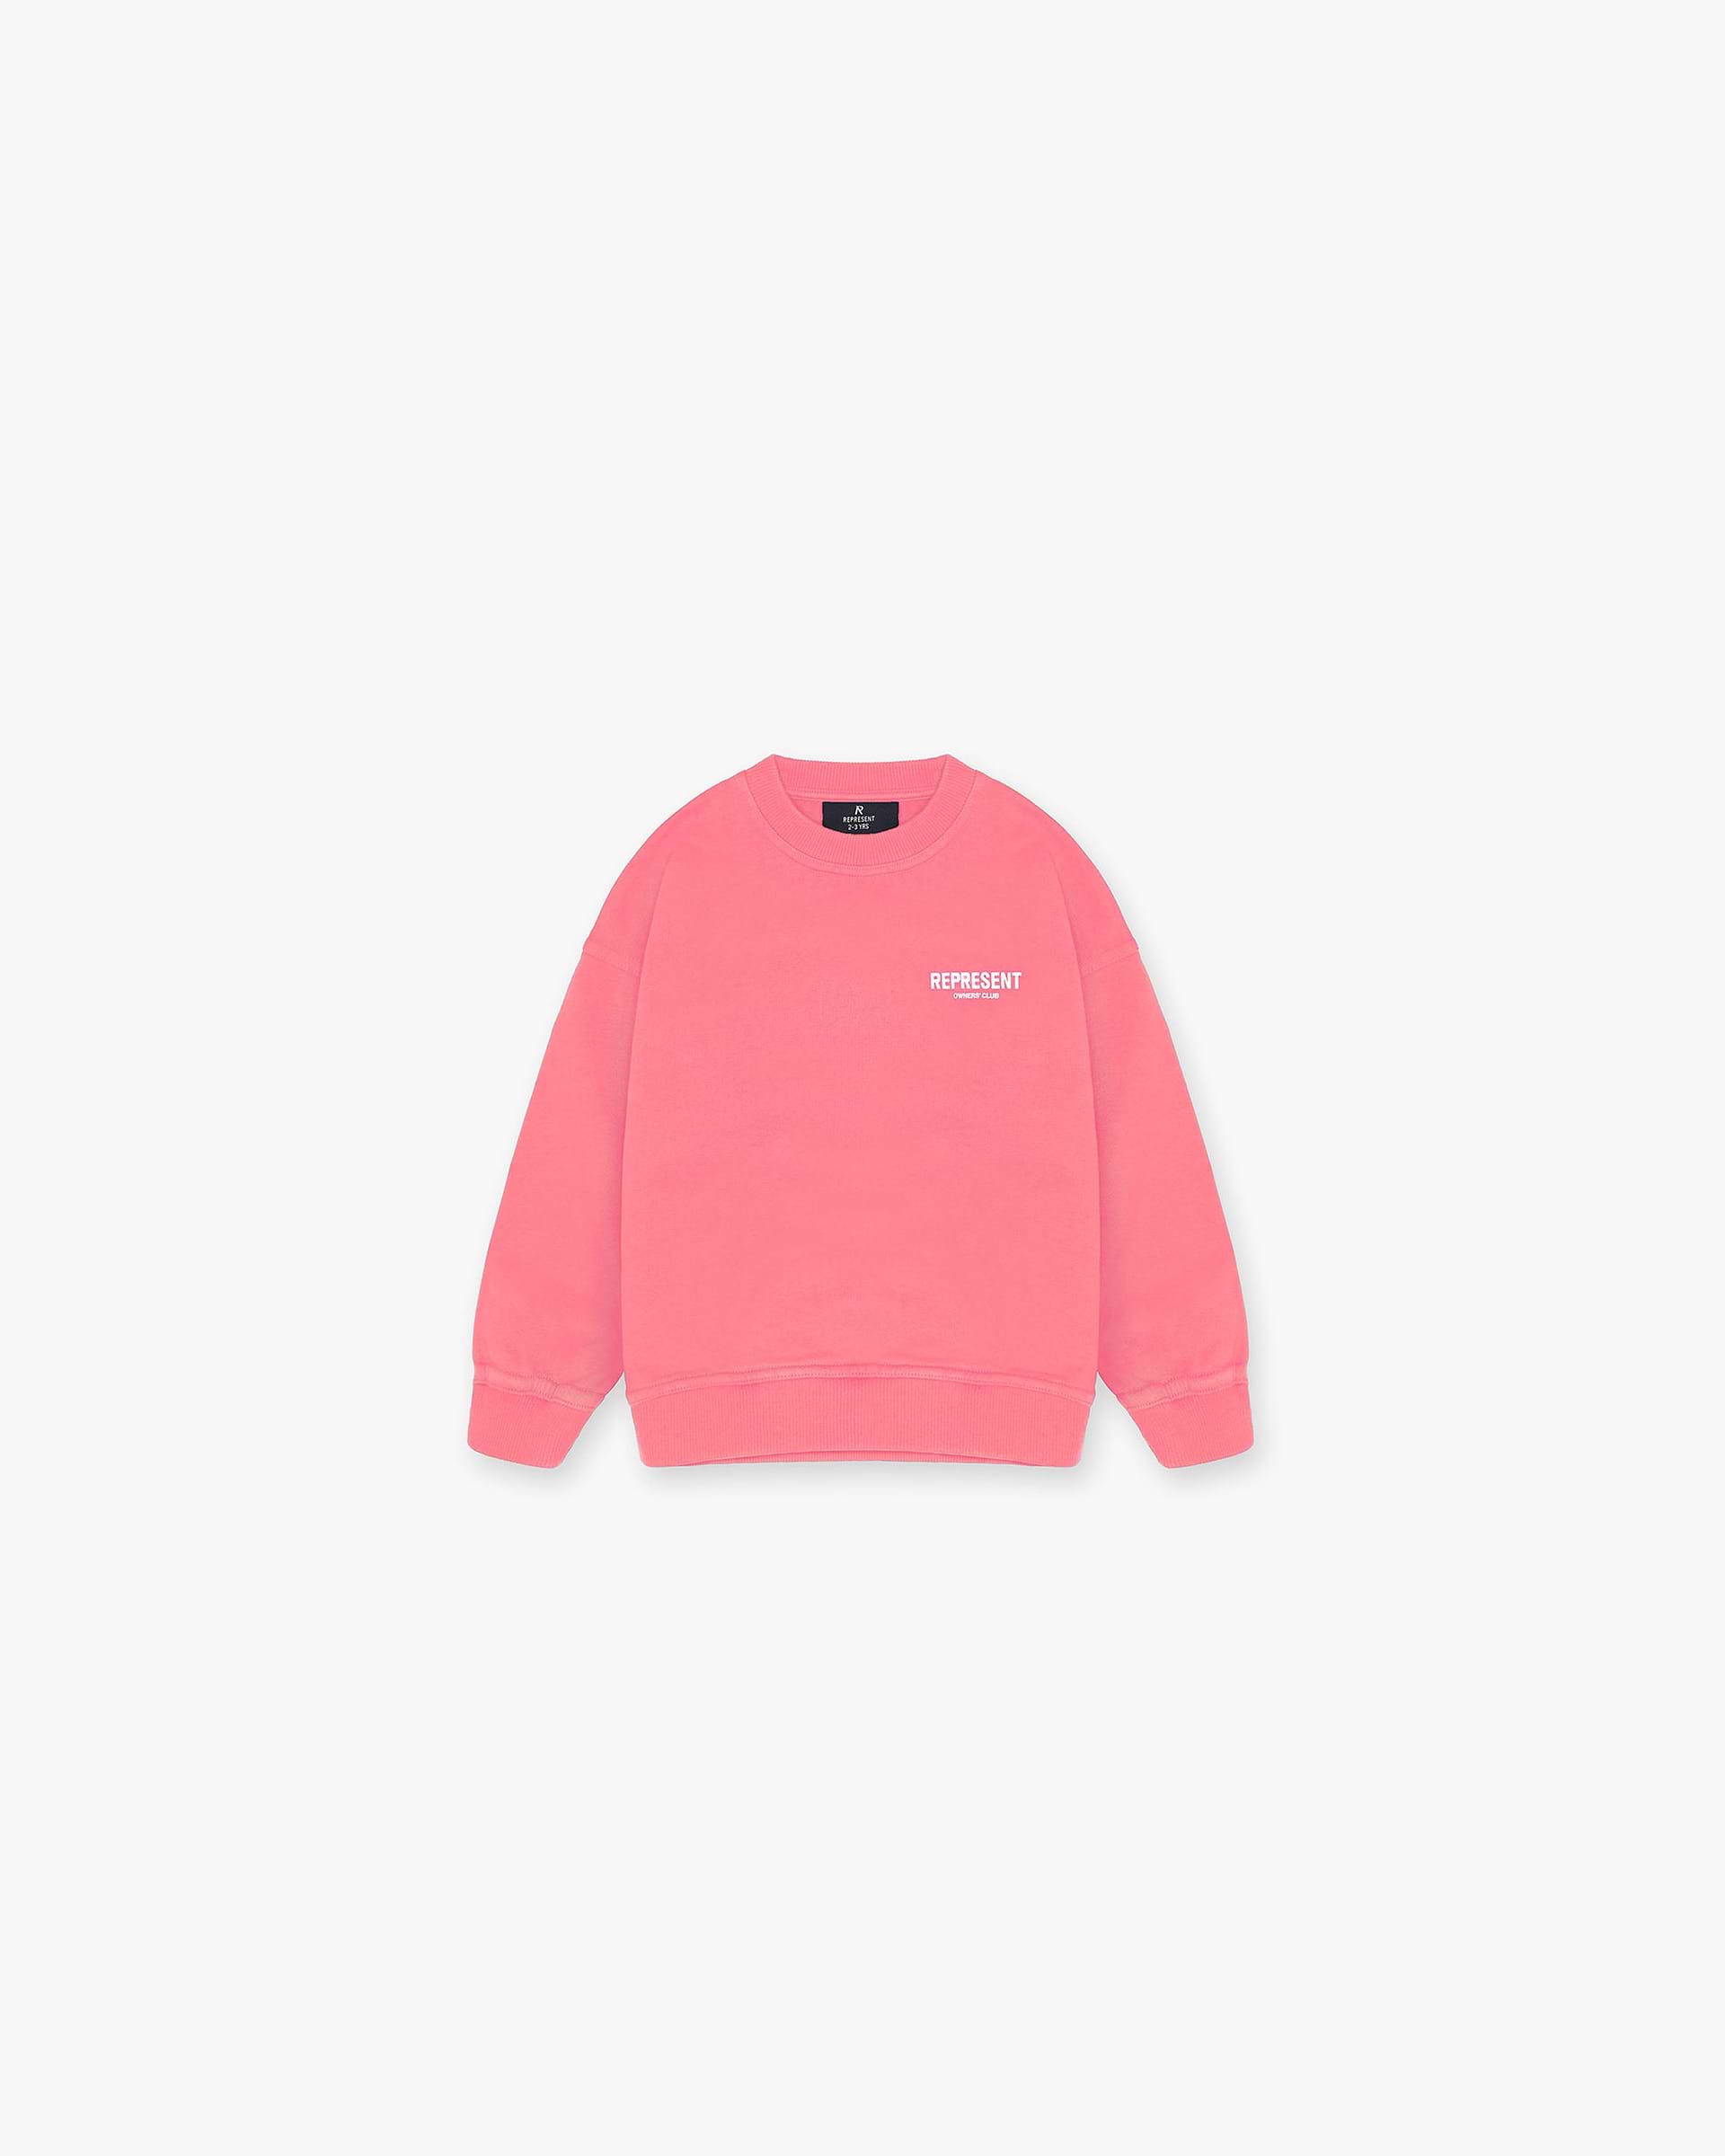 Represent Mini Owners Club Sweater - Bubblegum Pink